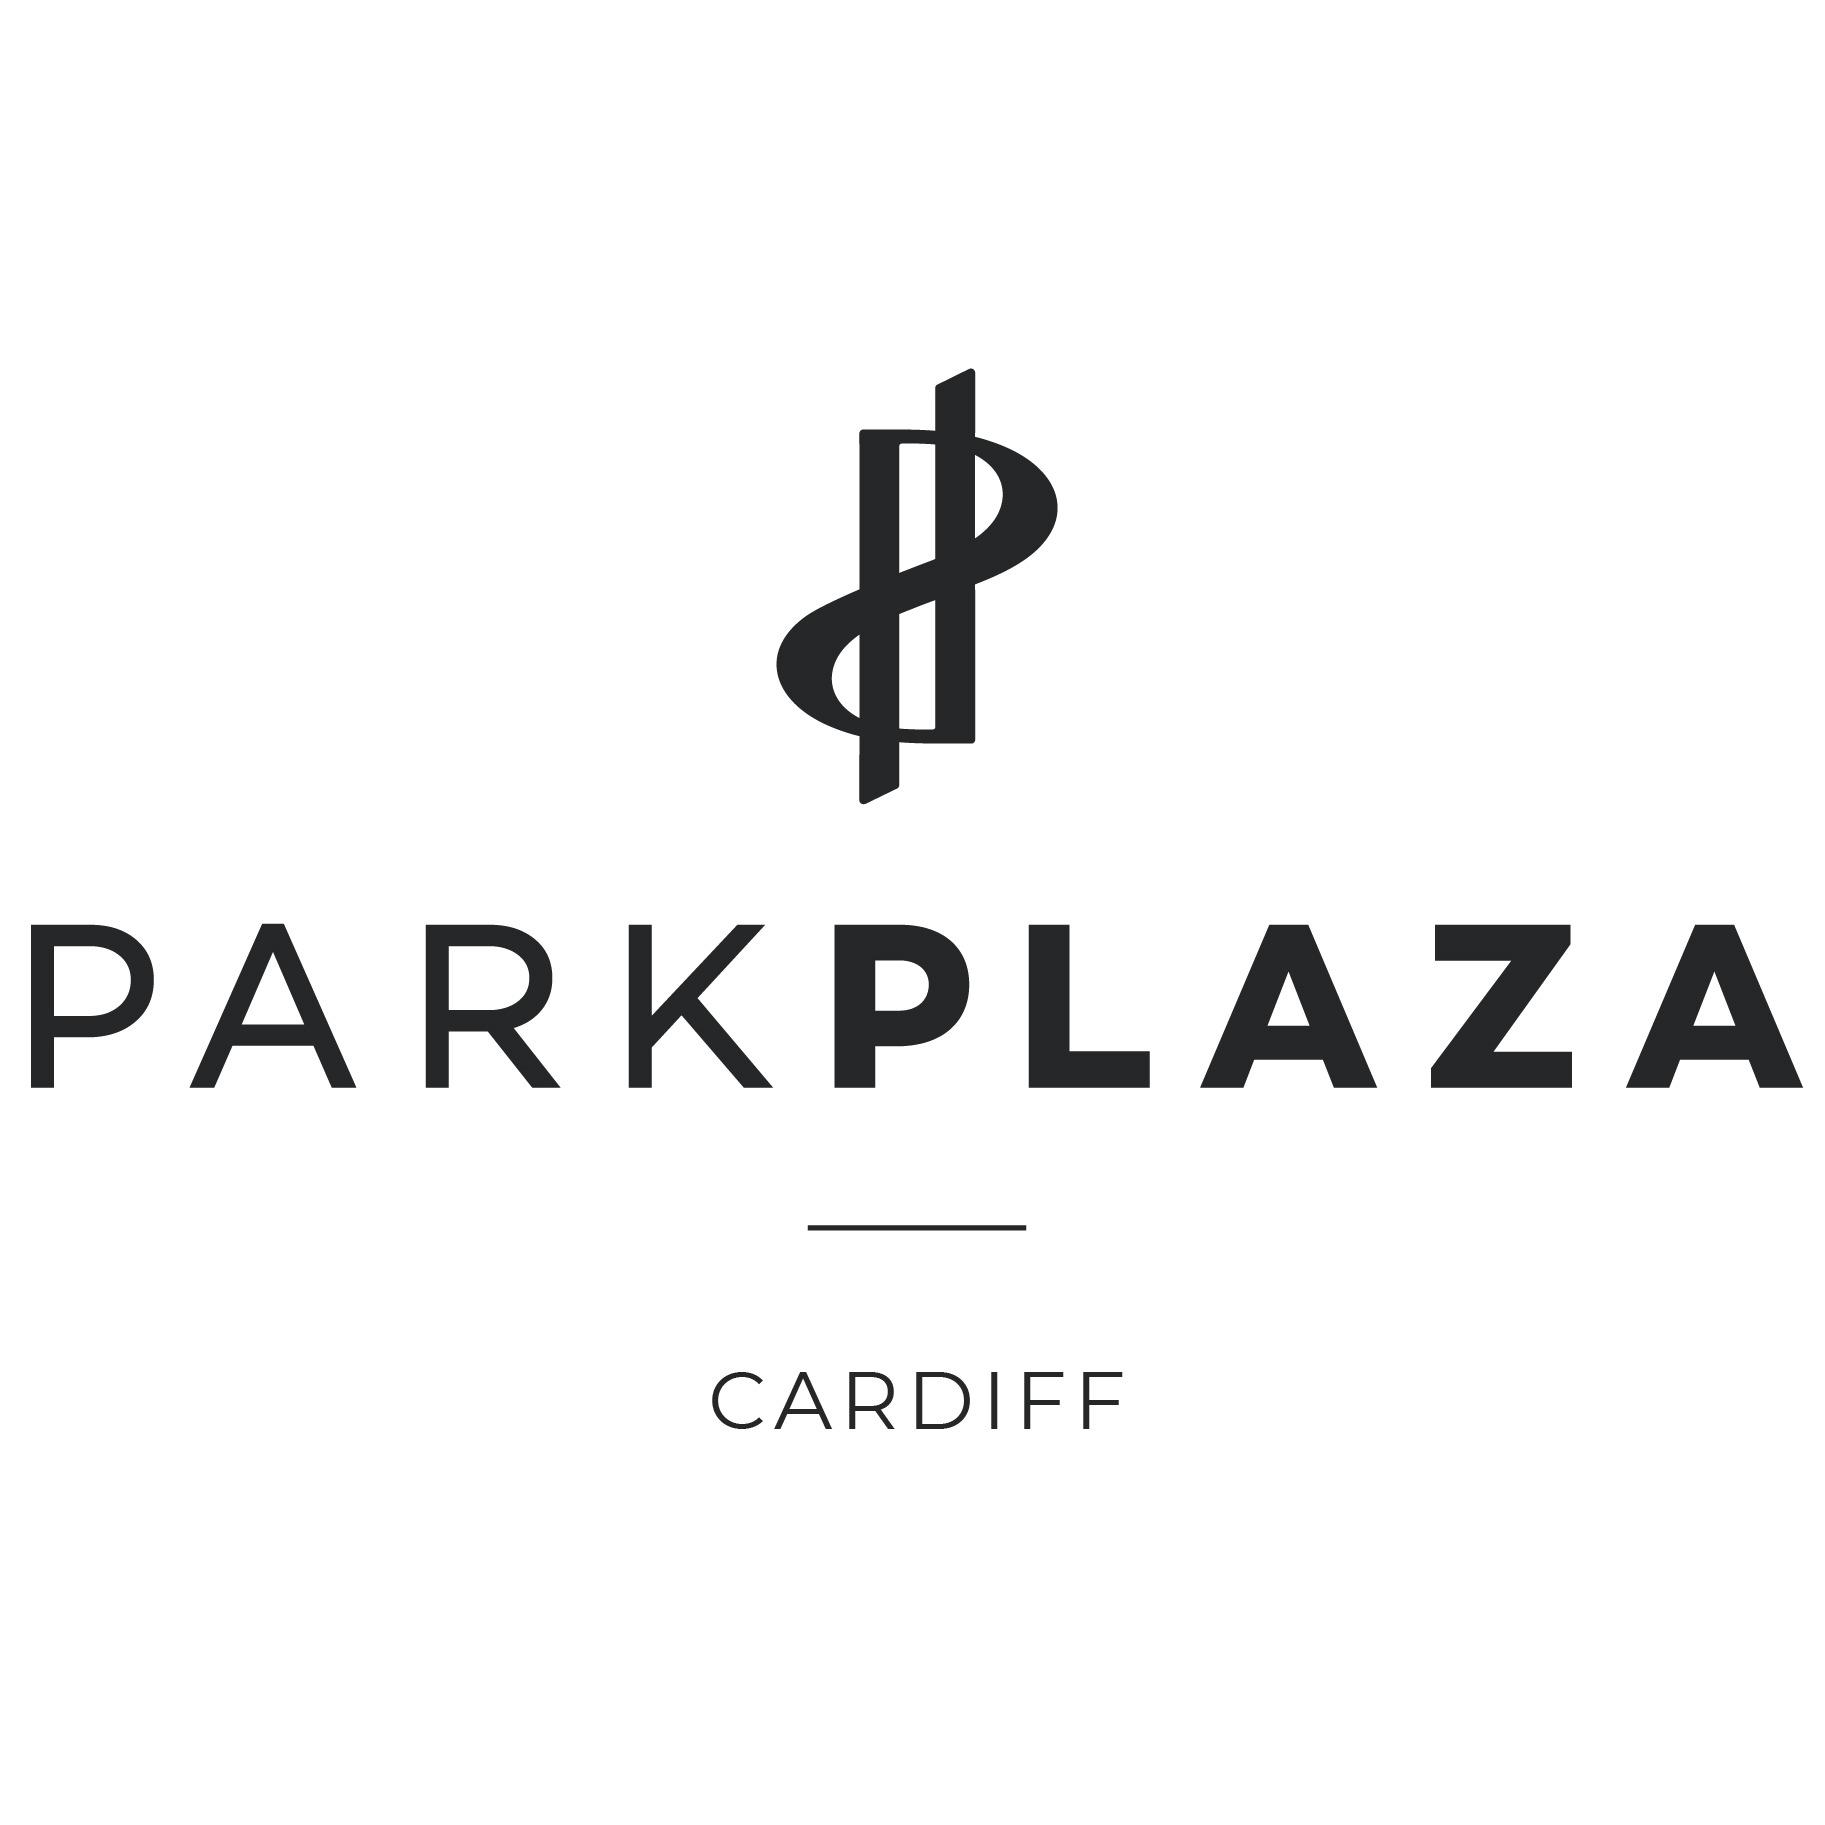 Park Plaza Cardiff Logo